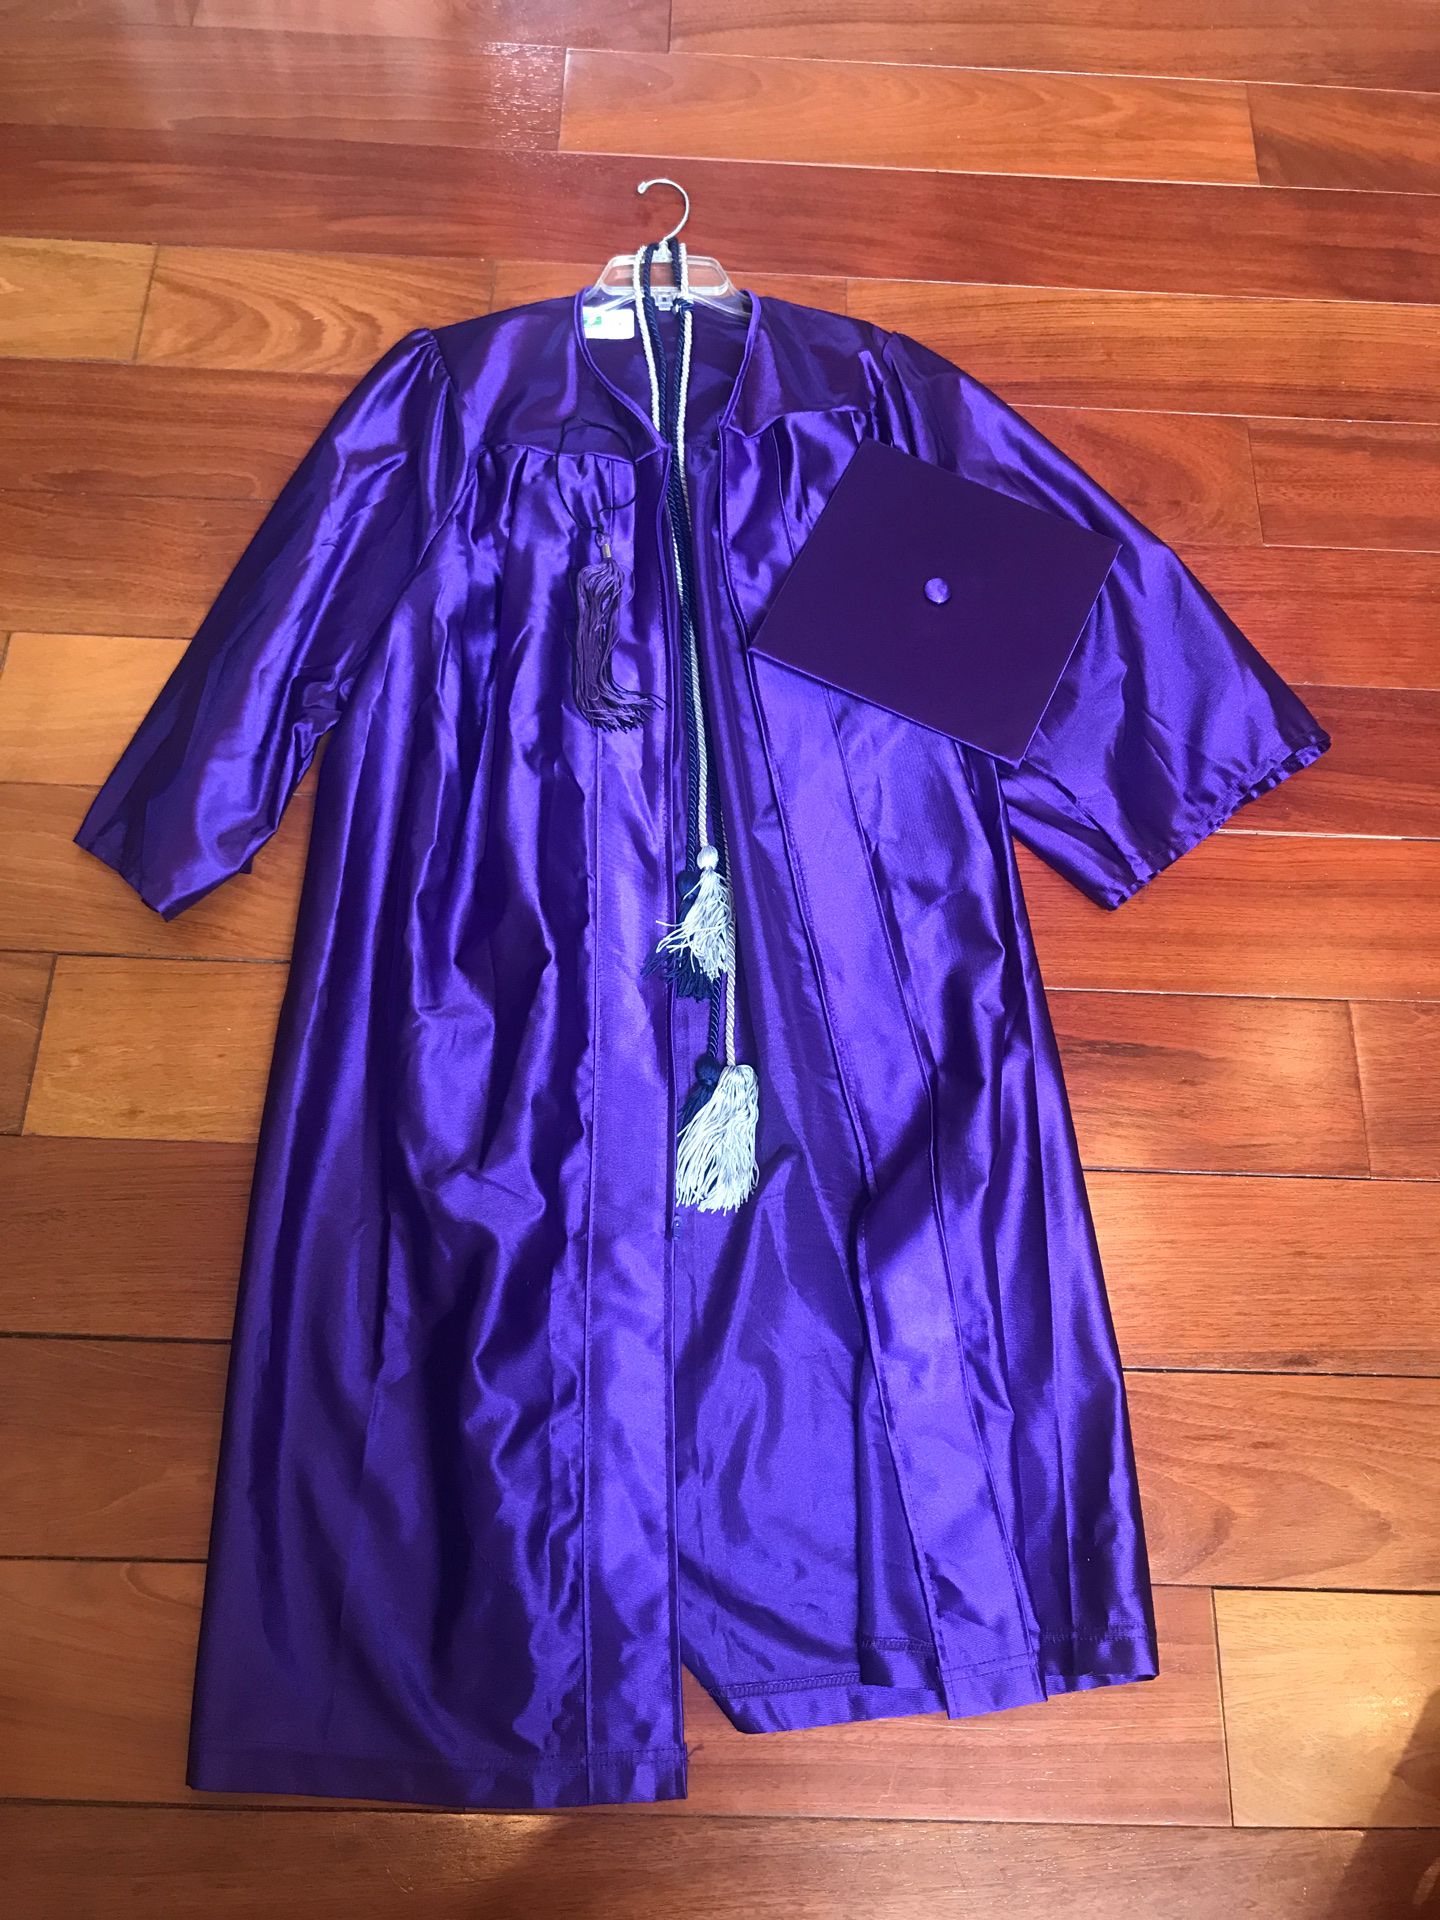 Purple Graduation Cap, Gown, Tassel, and Cords